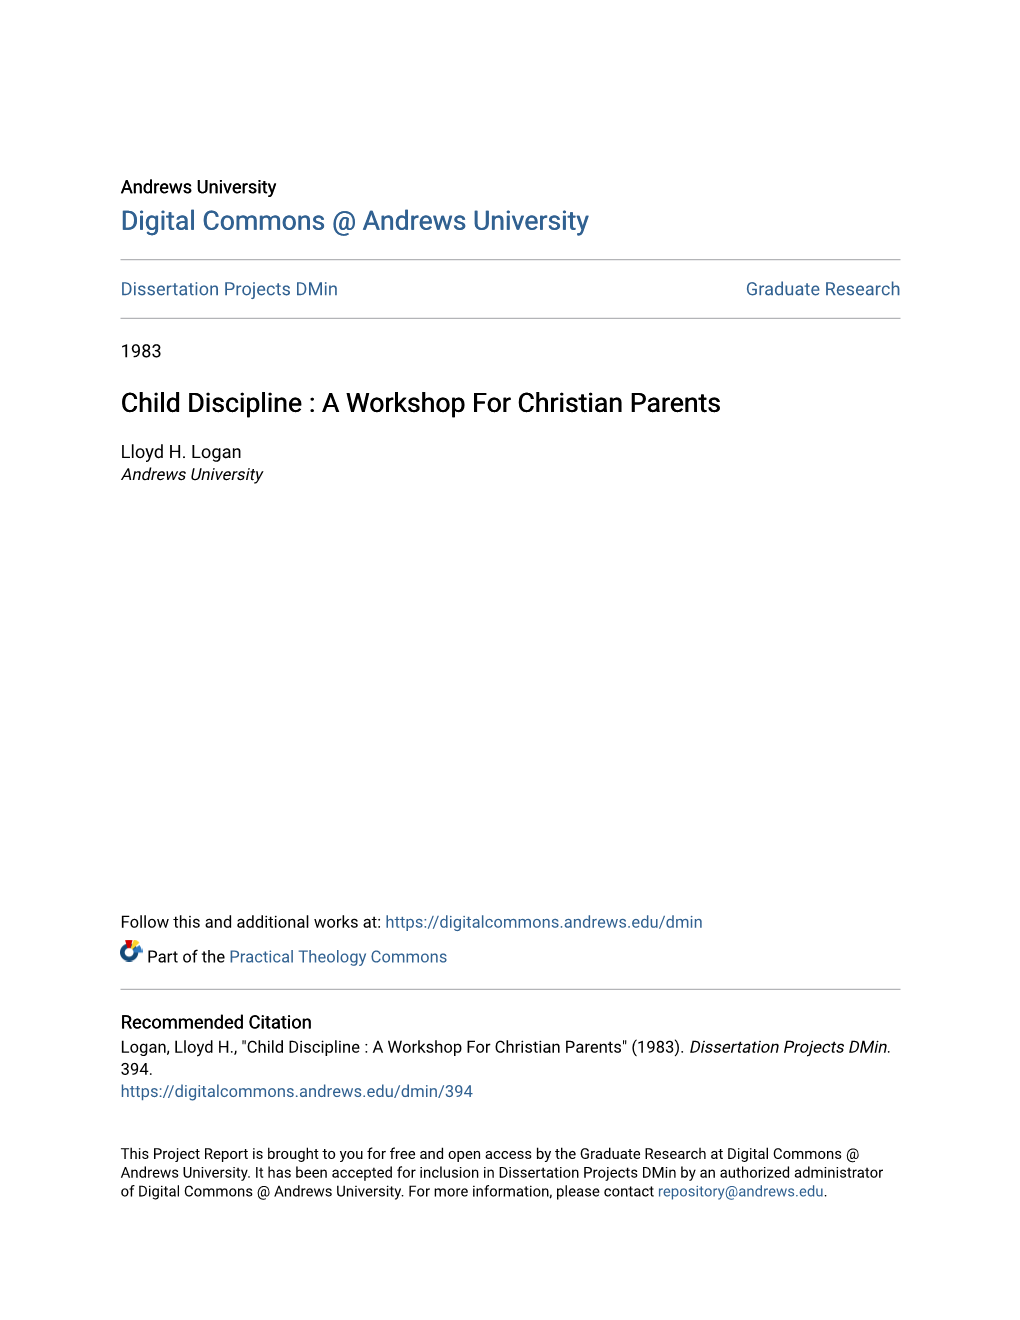 Child Discipline : a Workshop for Christian Parents